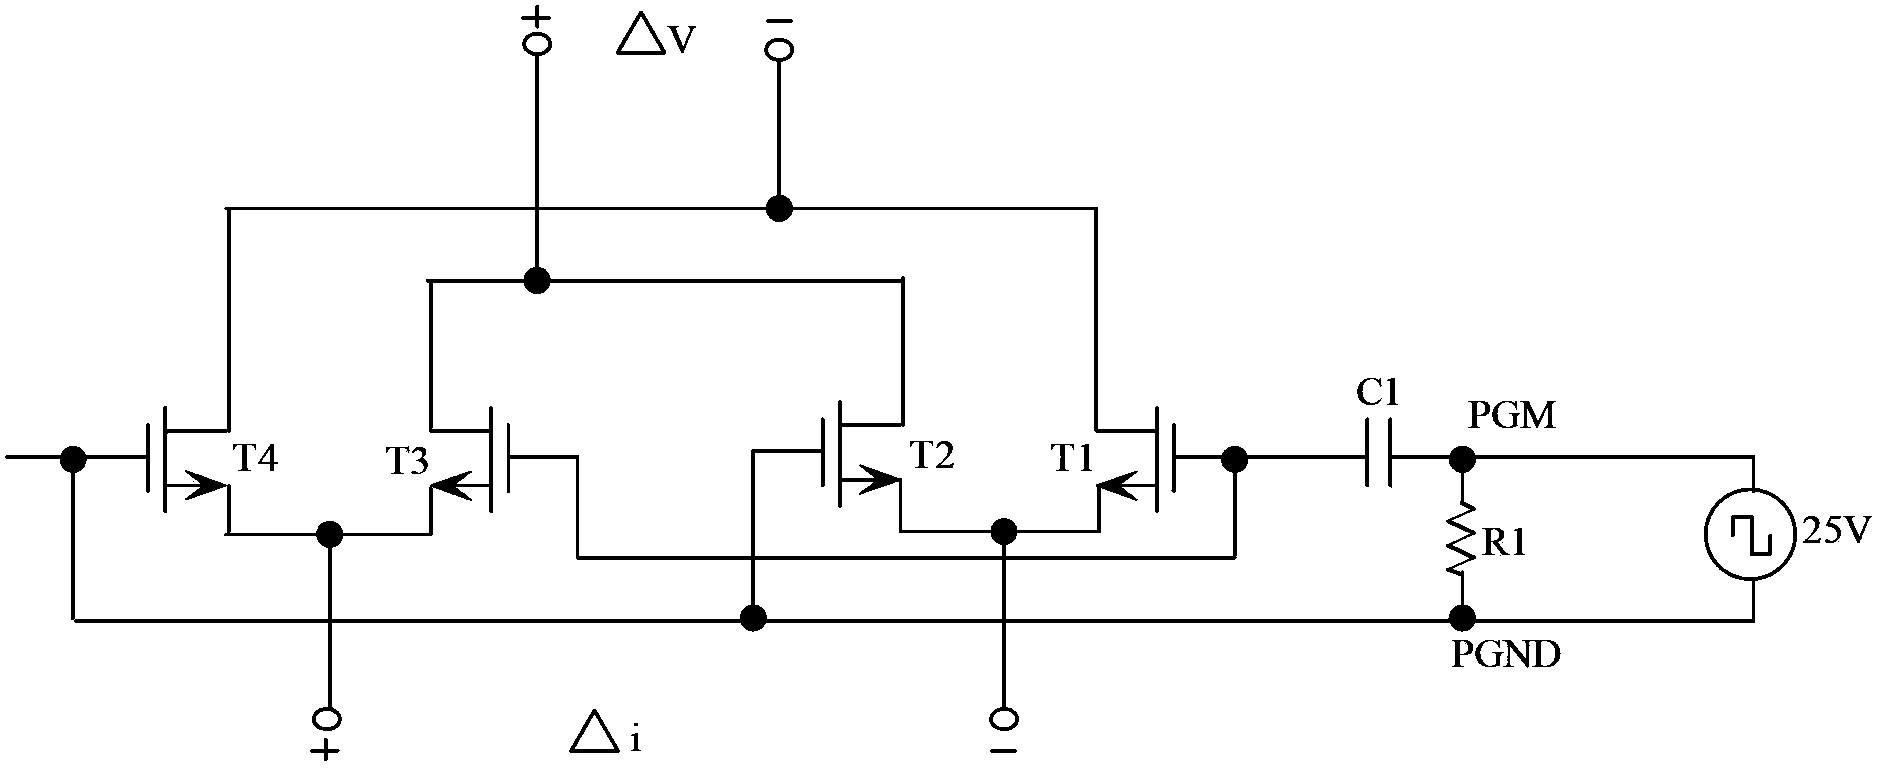 Method for adjusting operational amplifier input offset voltage in automobile fuel injection system